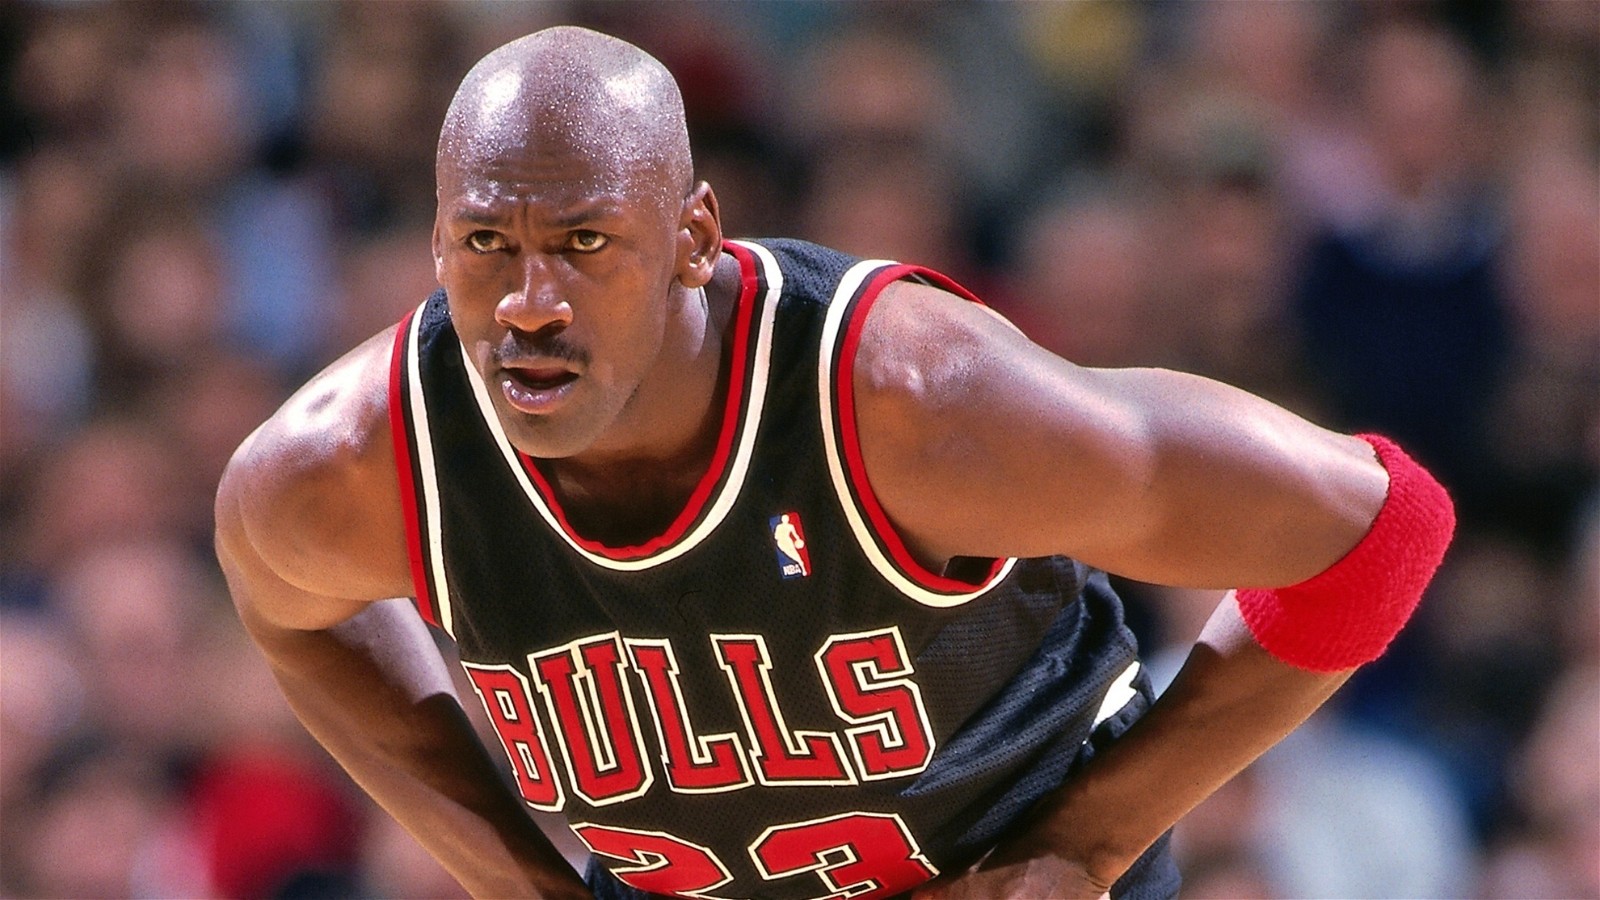 NBA legend Michael Jordan